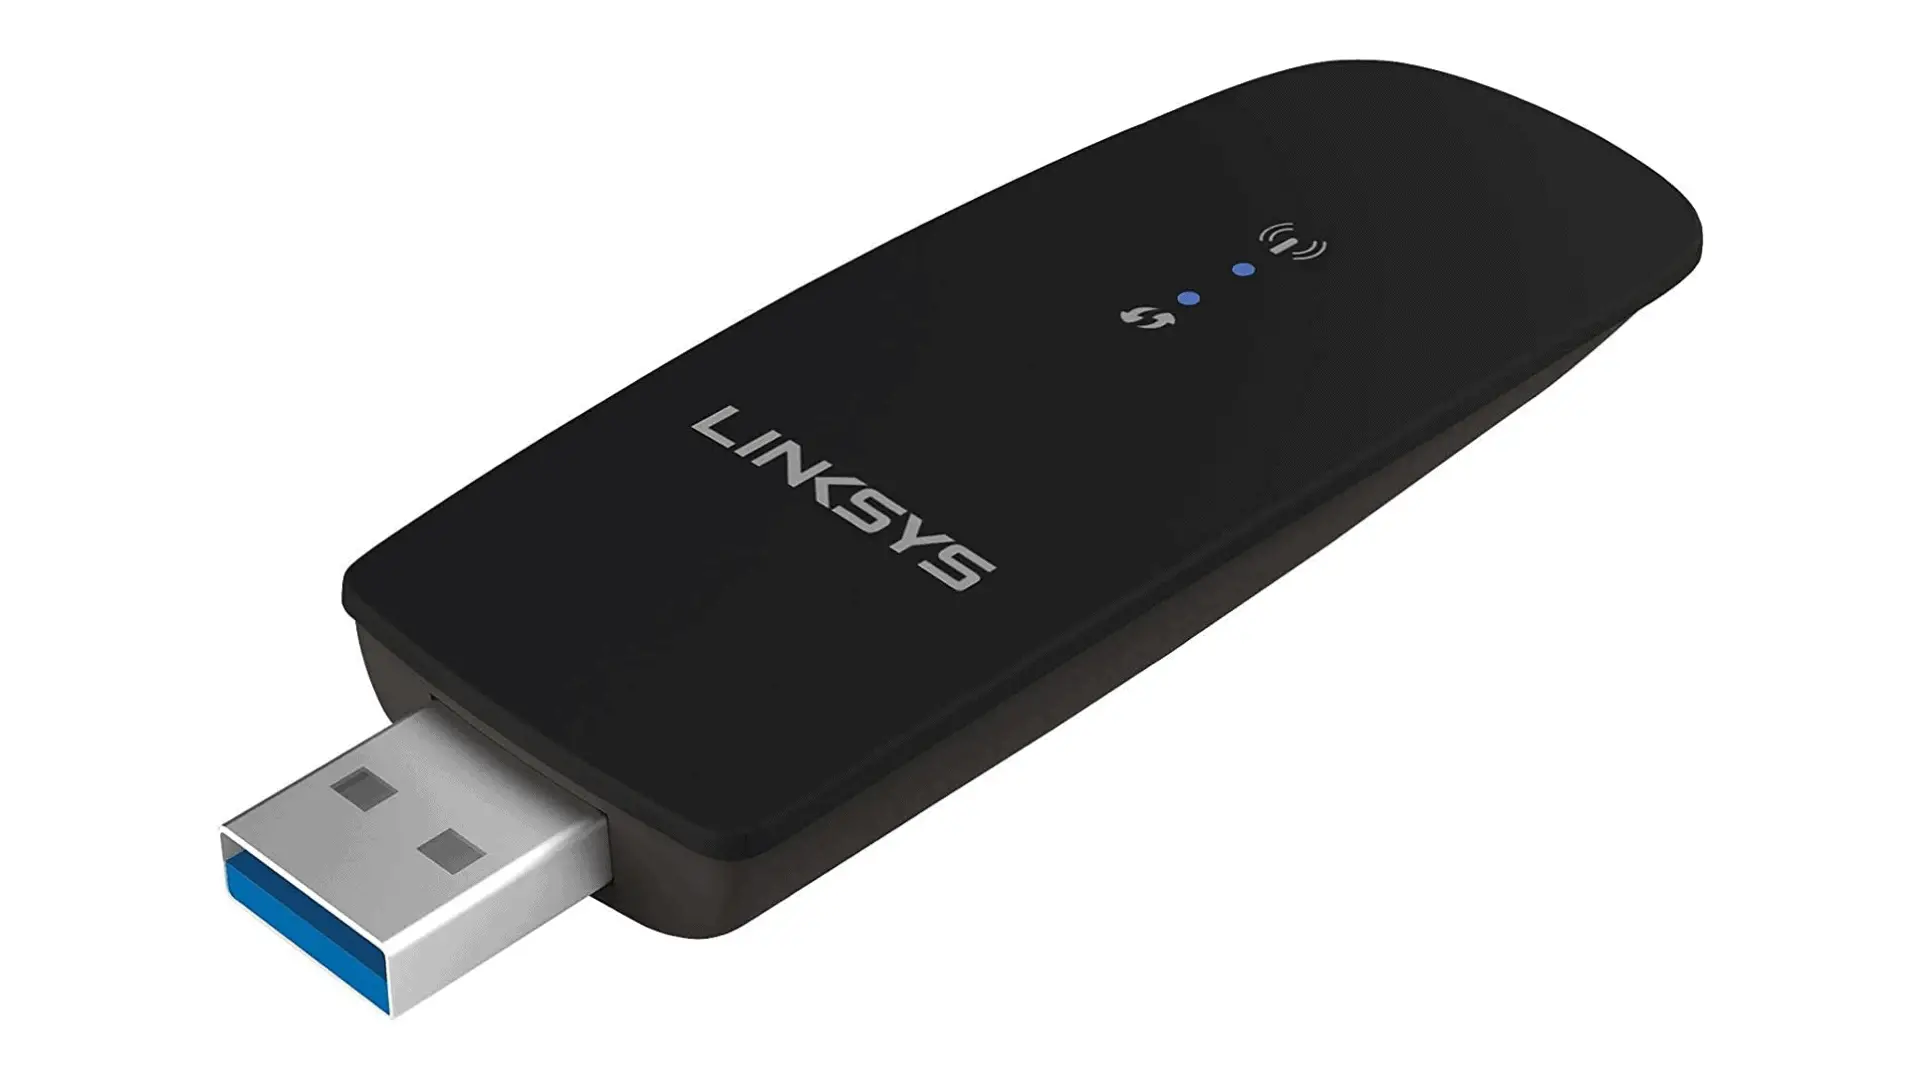 Linksys WUSB6300 Dual-Band AC1200 USB WiFi Adapter in black